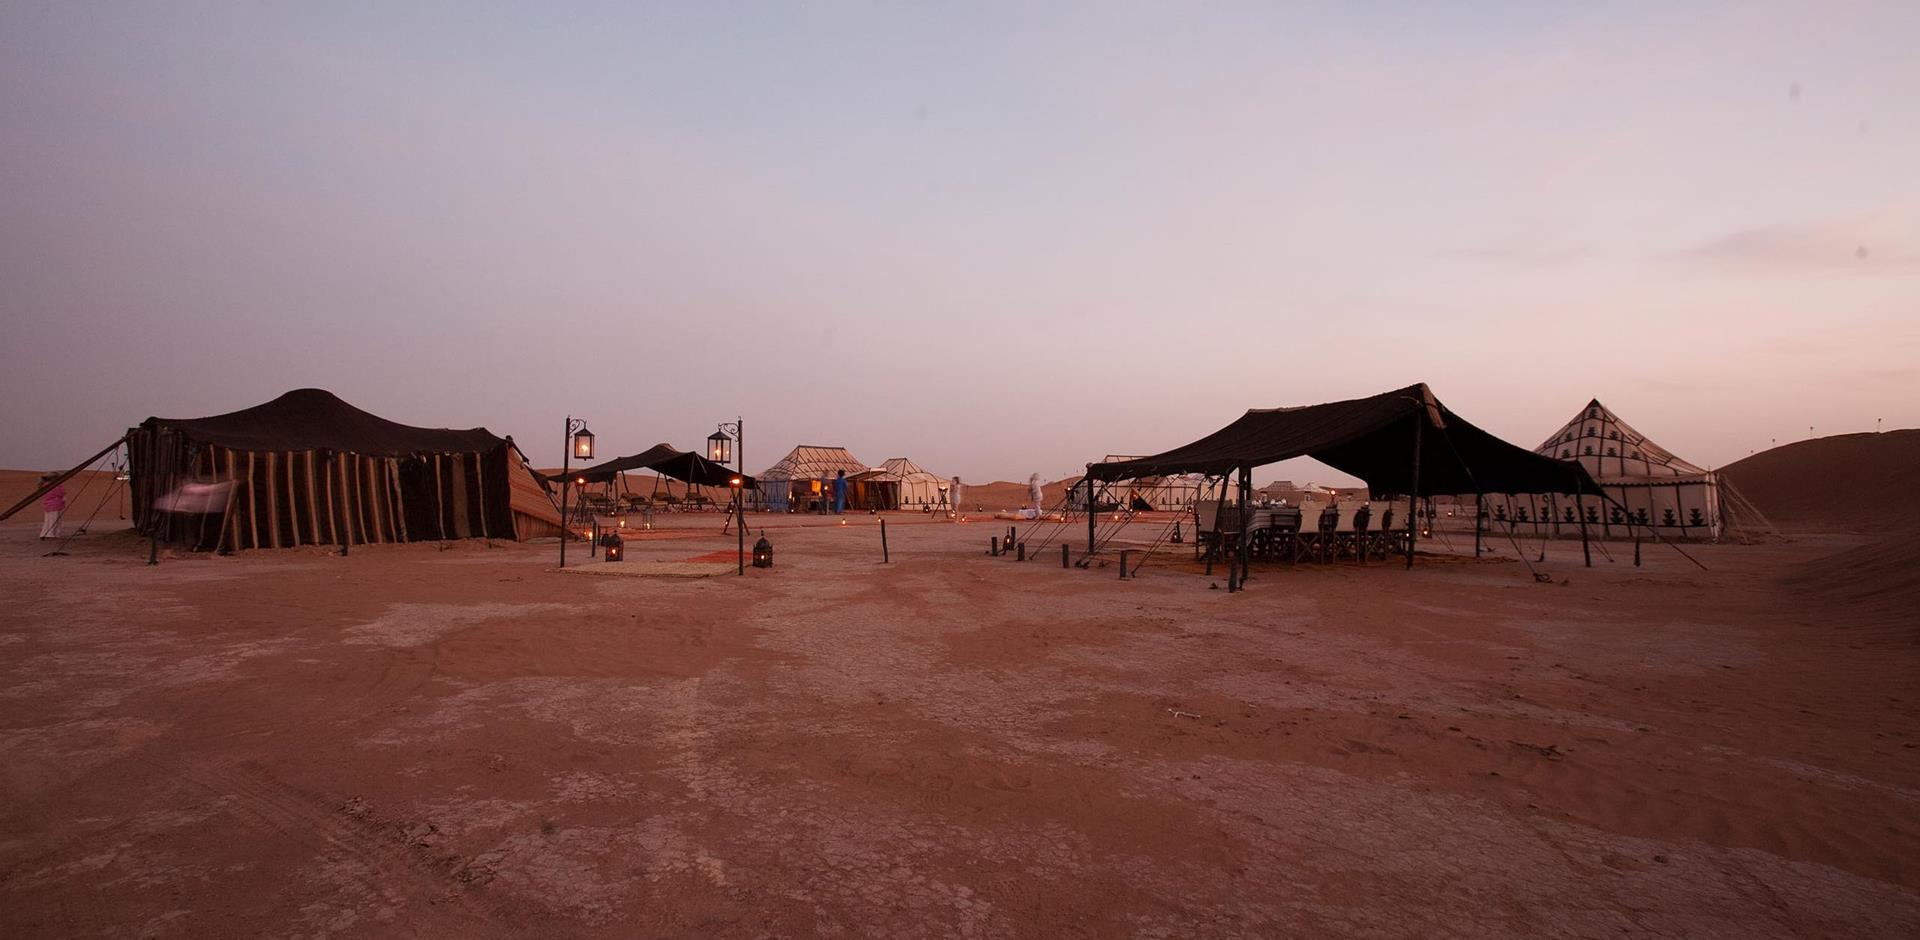 Morocco Desert camp, Sahara, Morocco